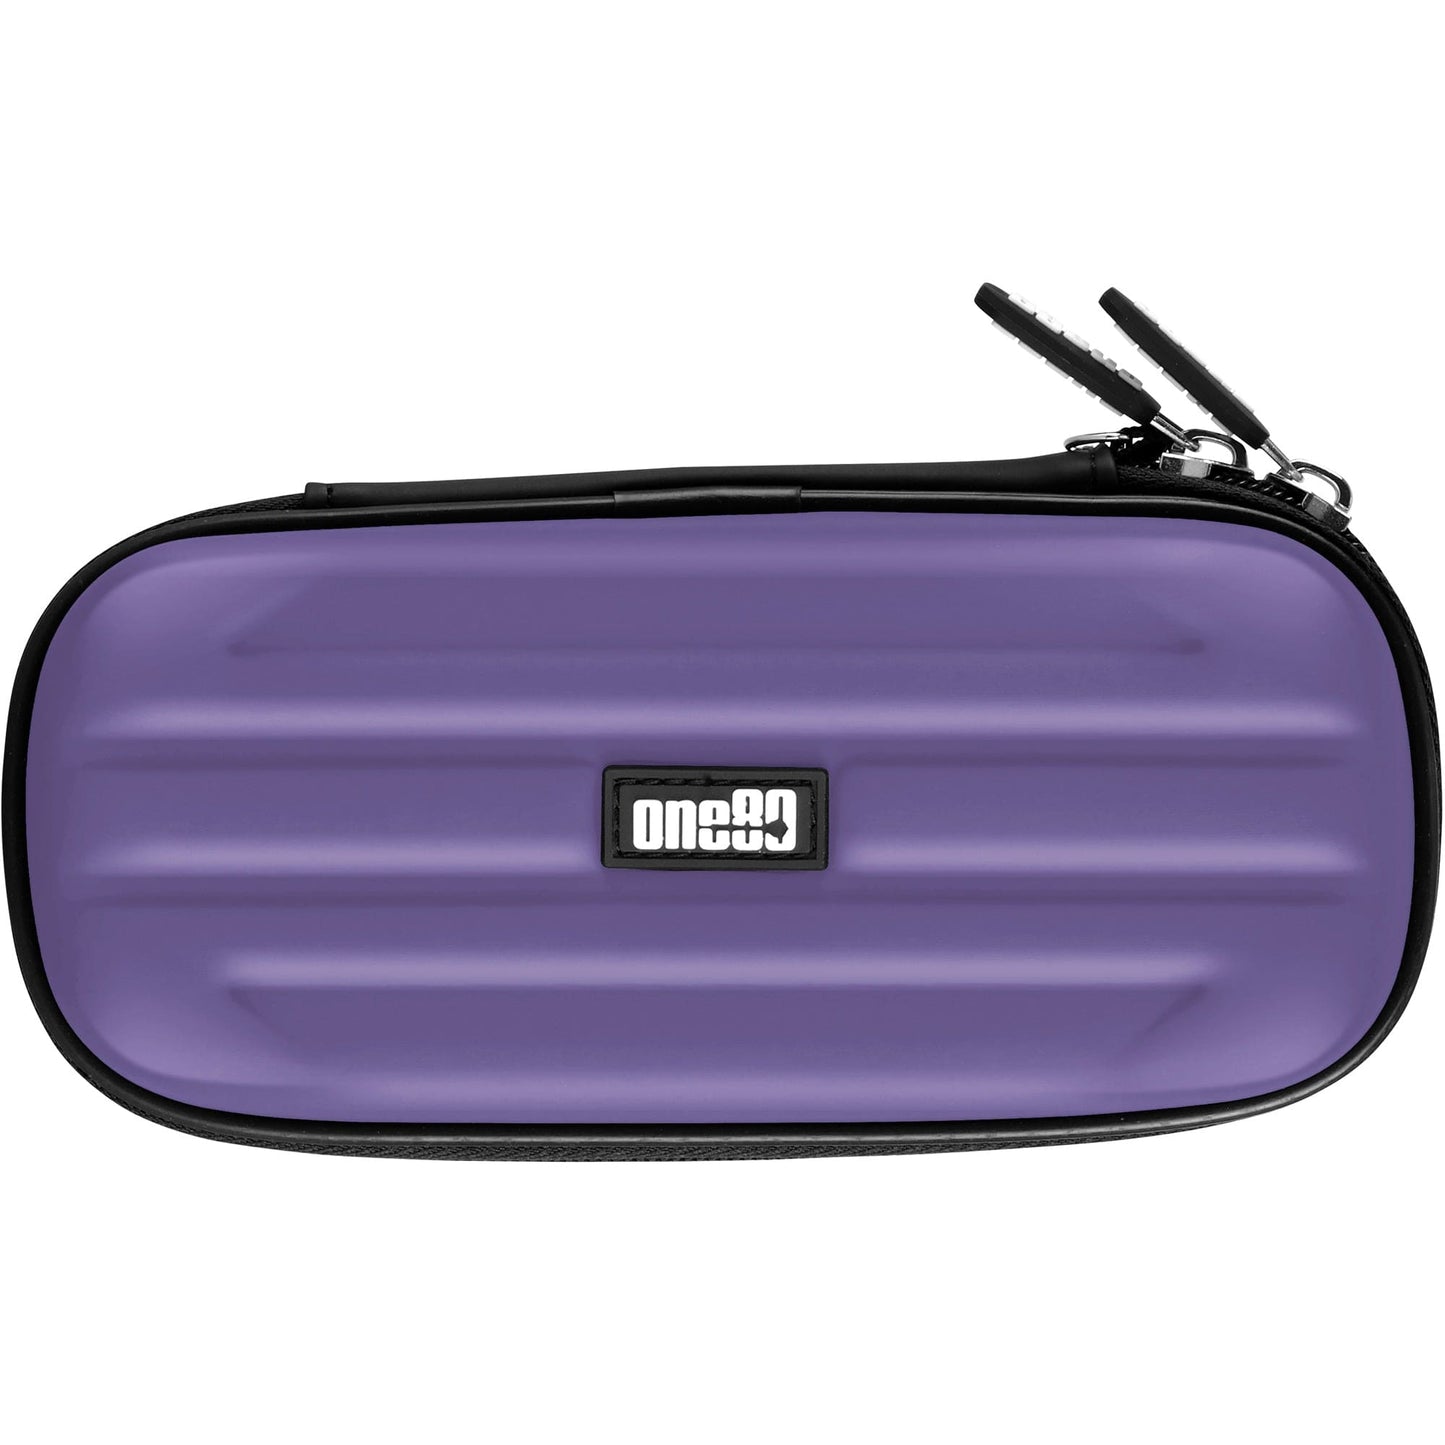 One80 Shard Mini Dart Case - Strong EVA Material - Colours Purple